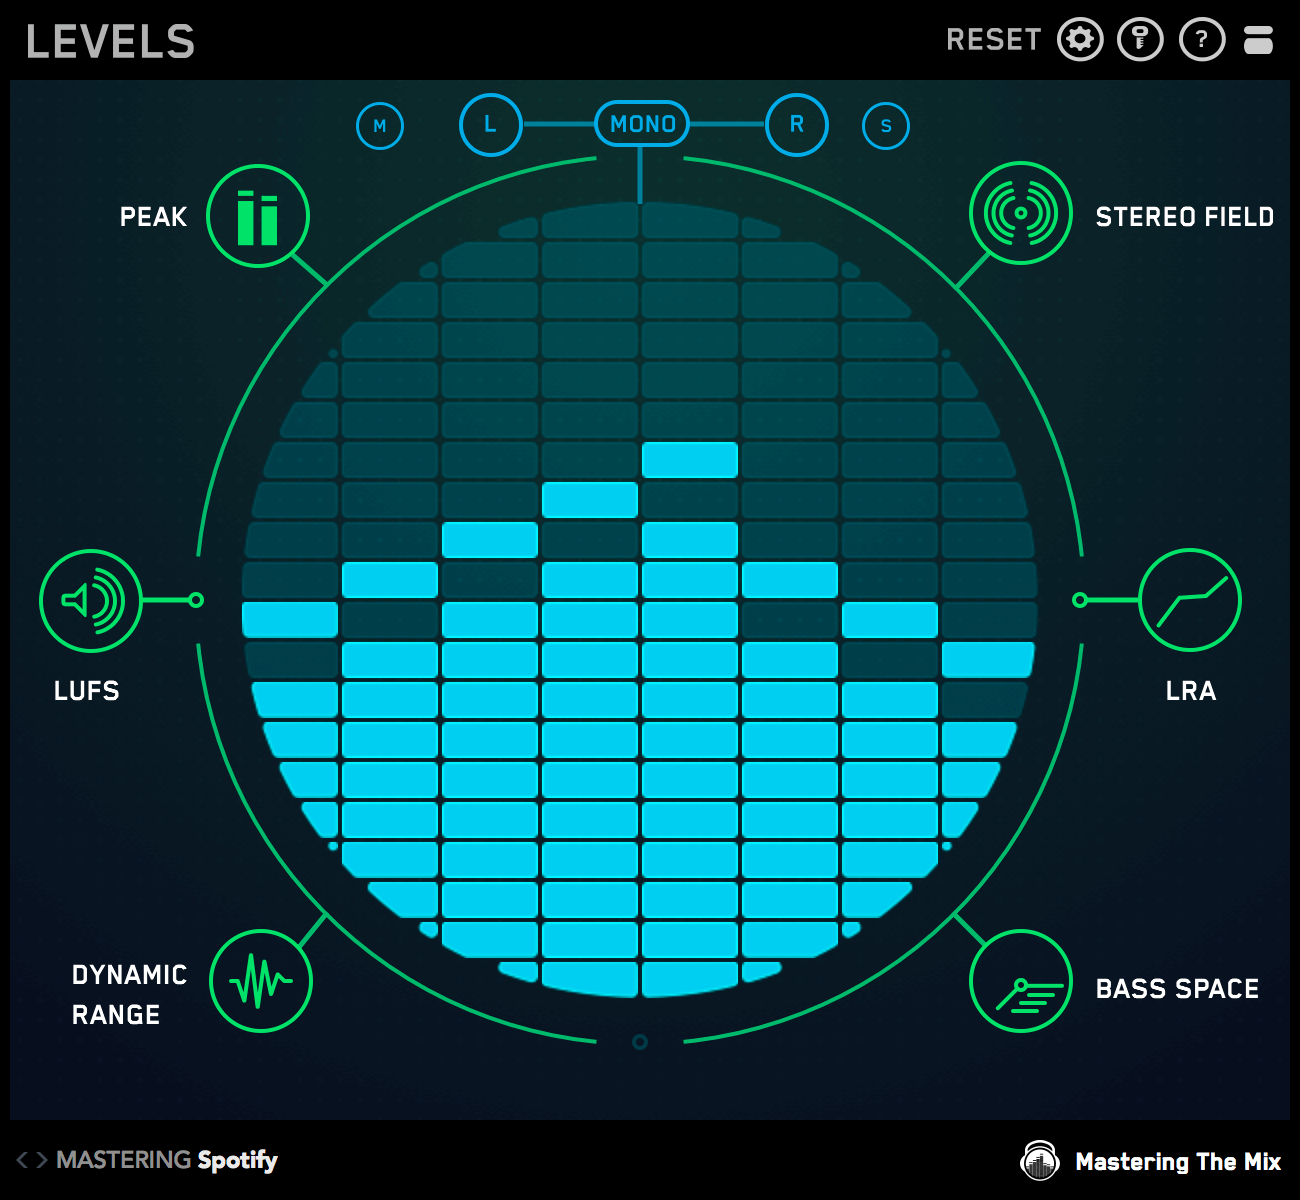 Audio Mixing Chart